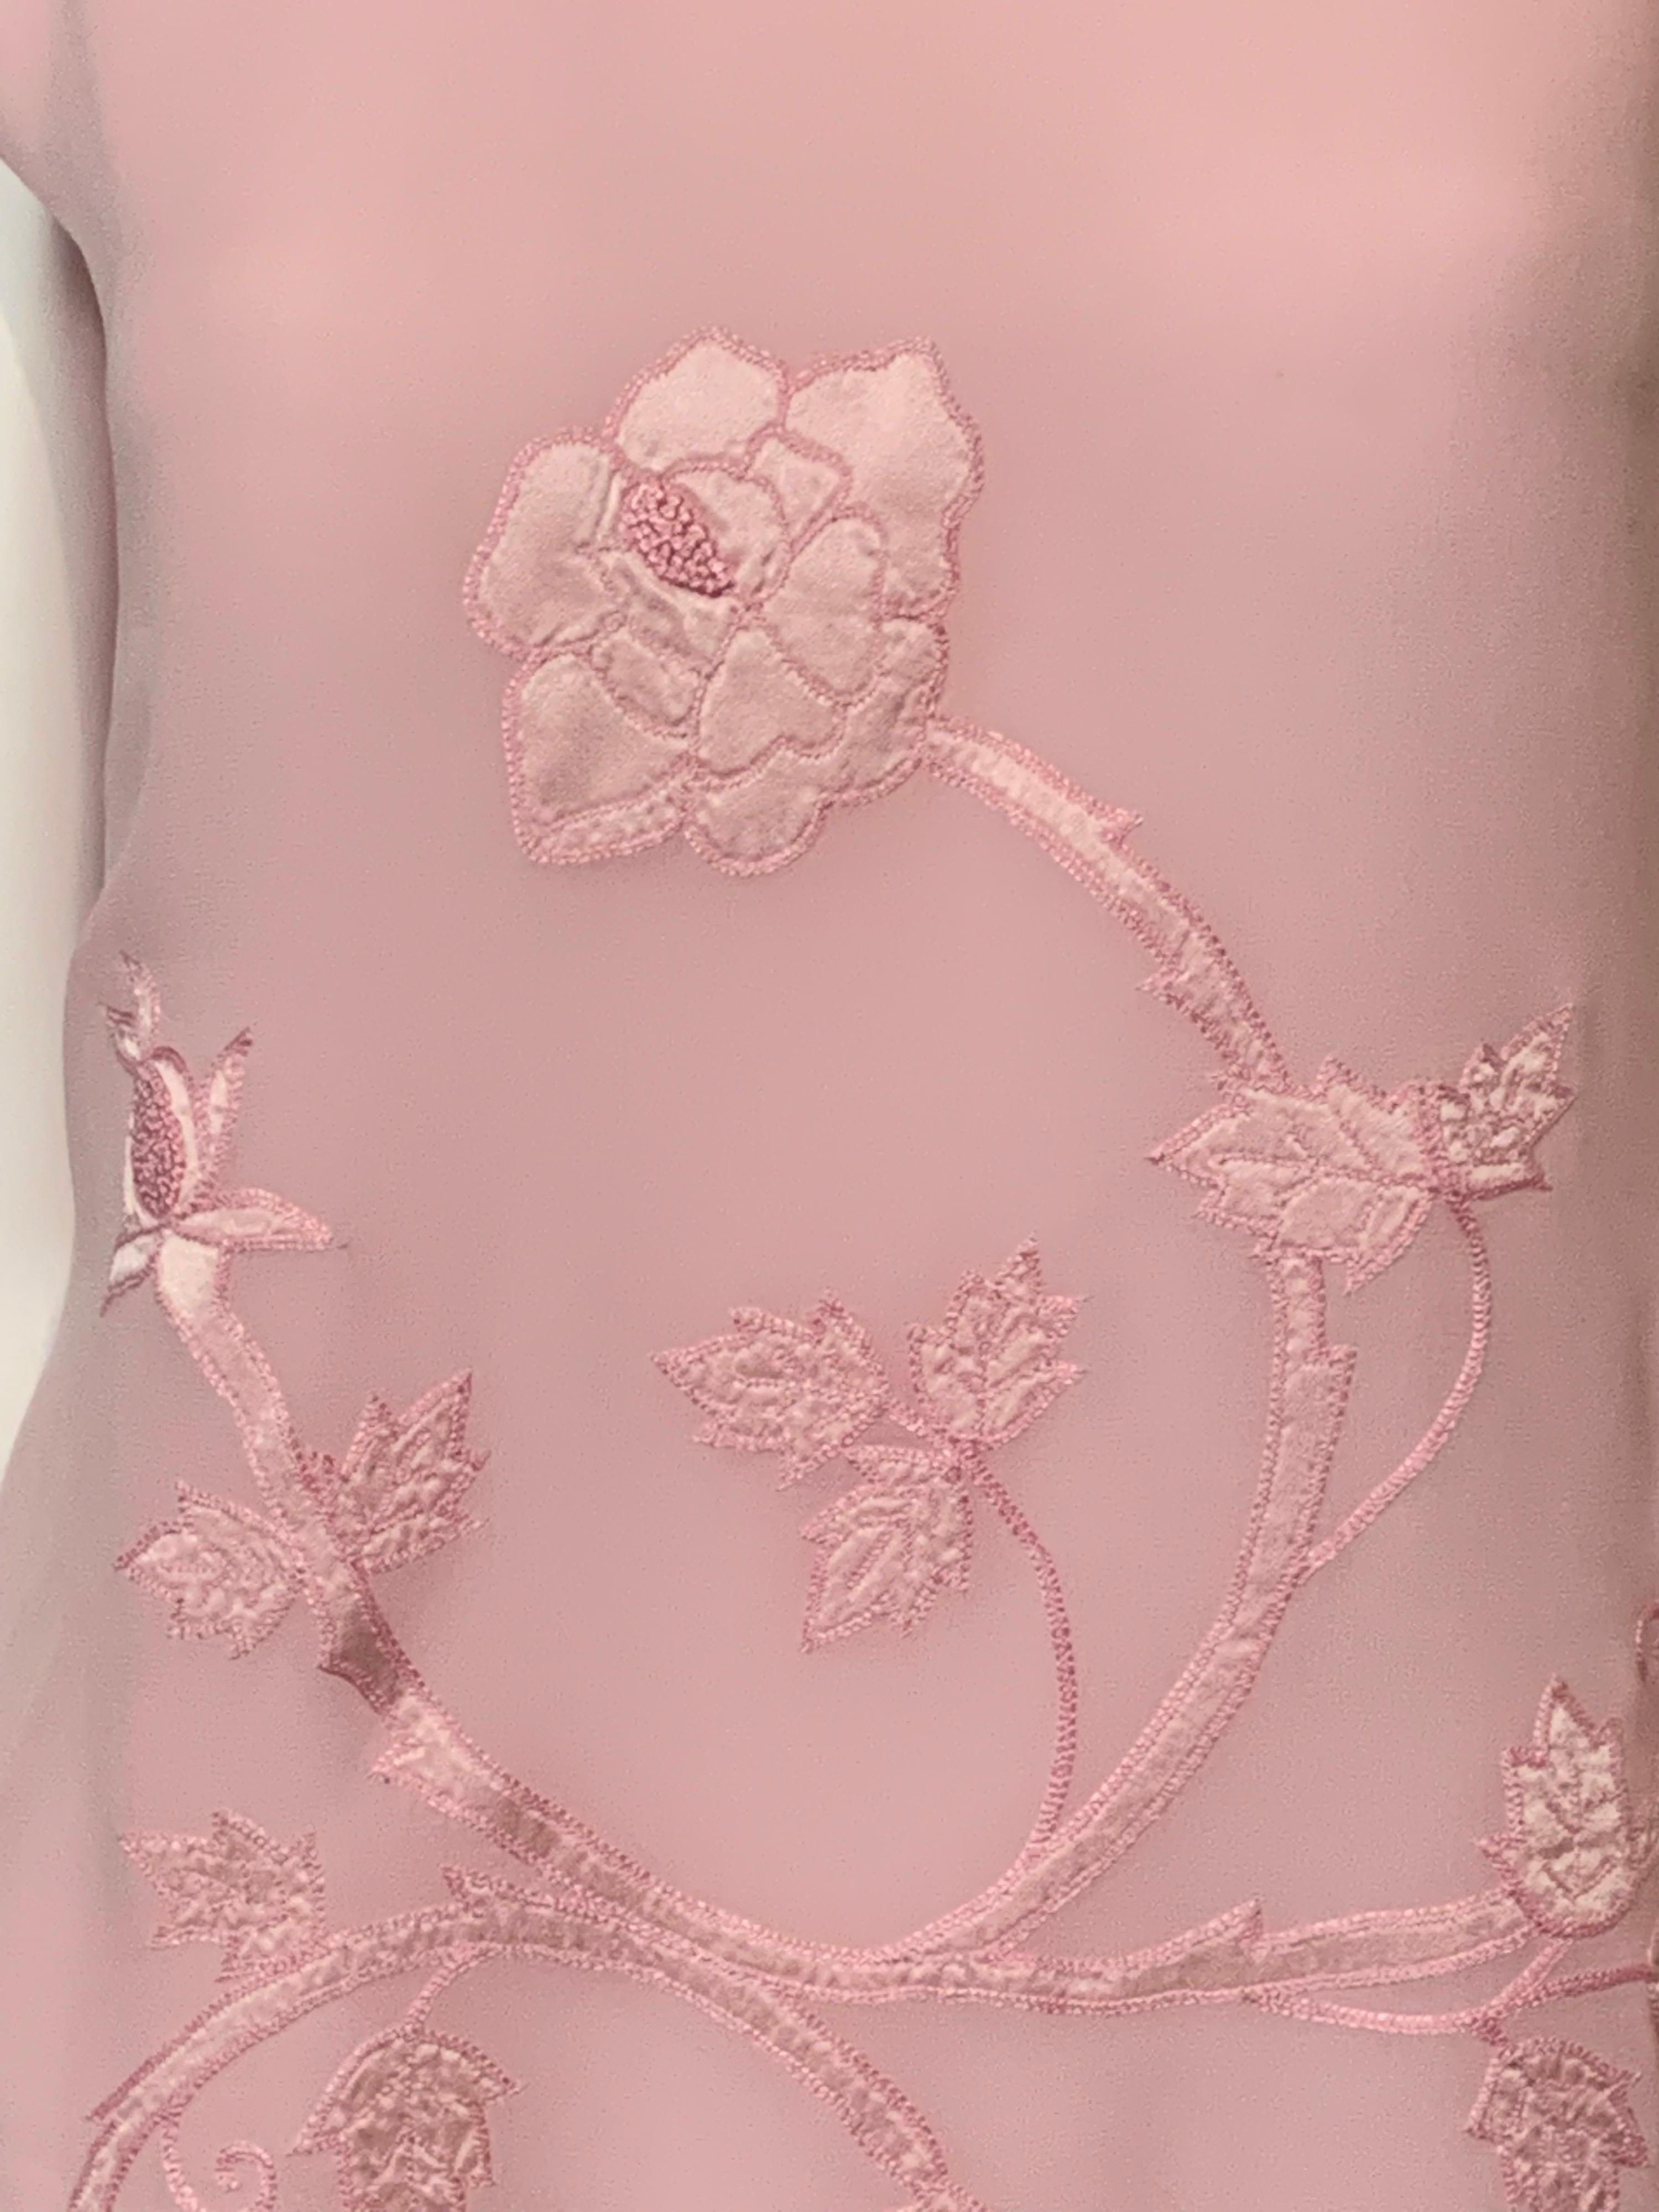 Women's Alberta Ferretti Pink Silk Chiffon Floral Lingerie Dress Appliqued Satin Flowers For Sale